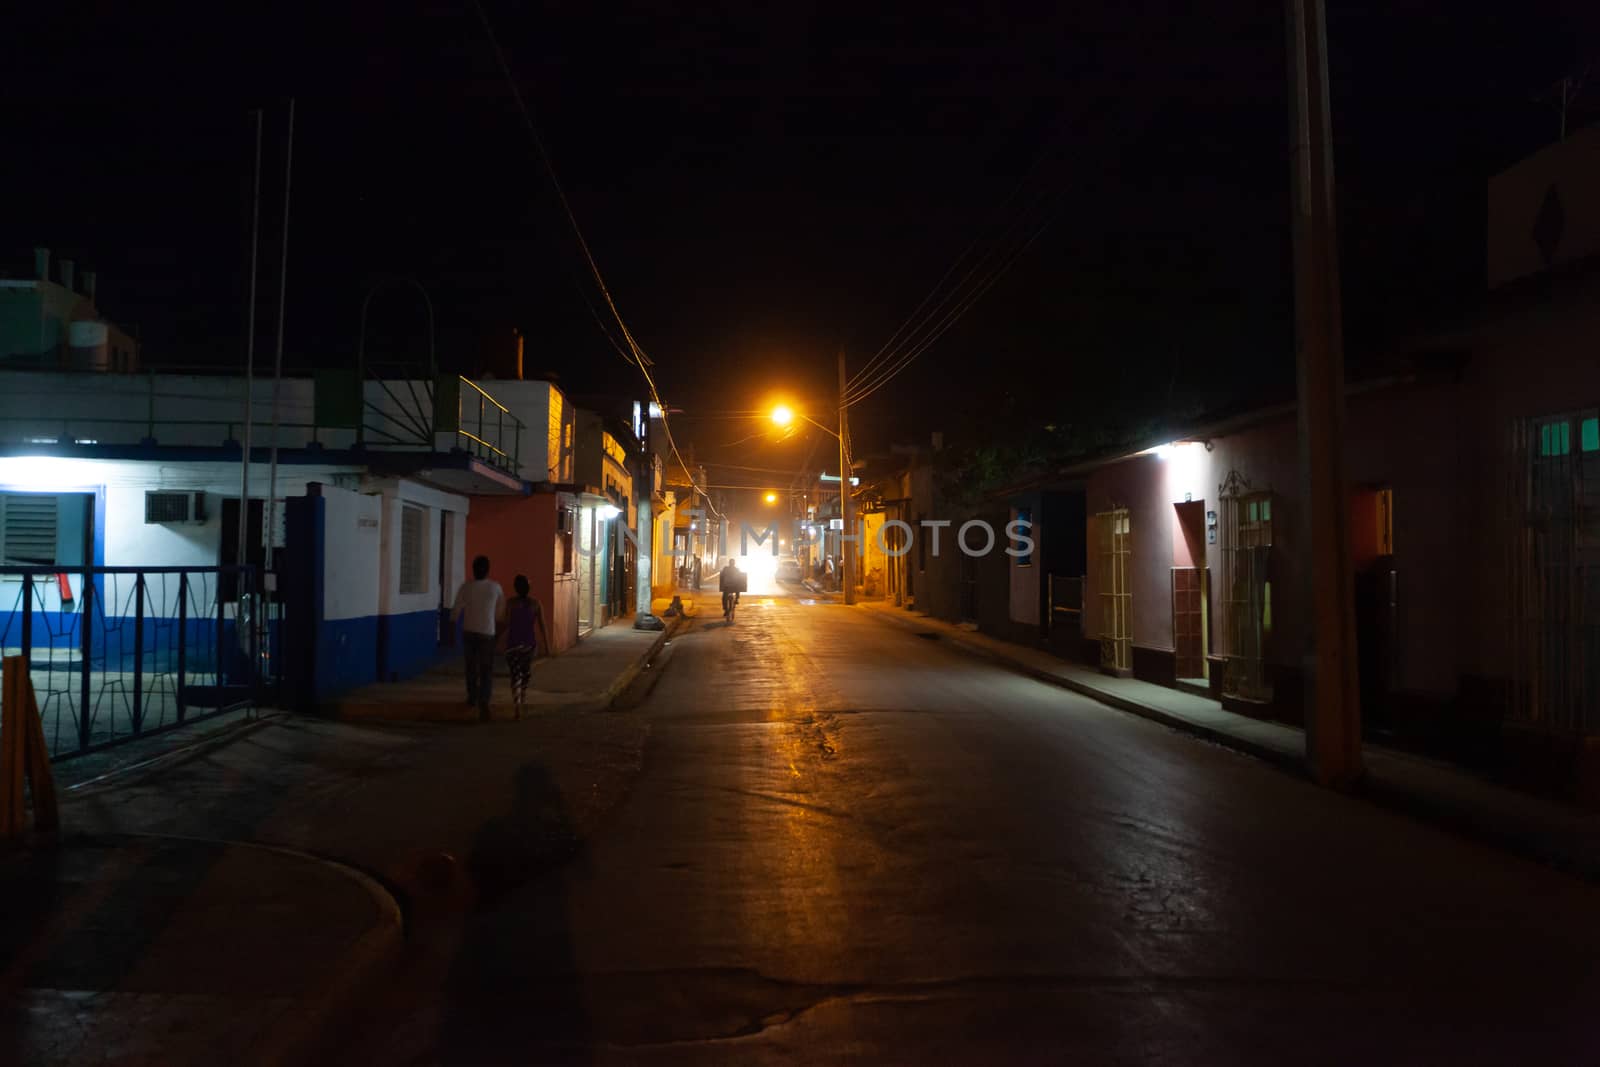 Trinidad, Cuba - 2 February 2015: street at night